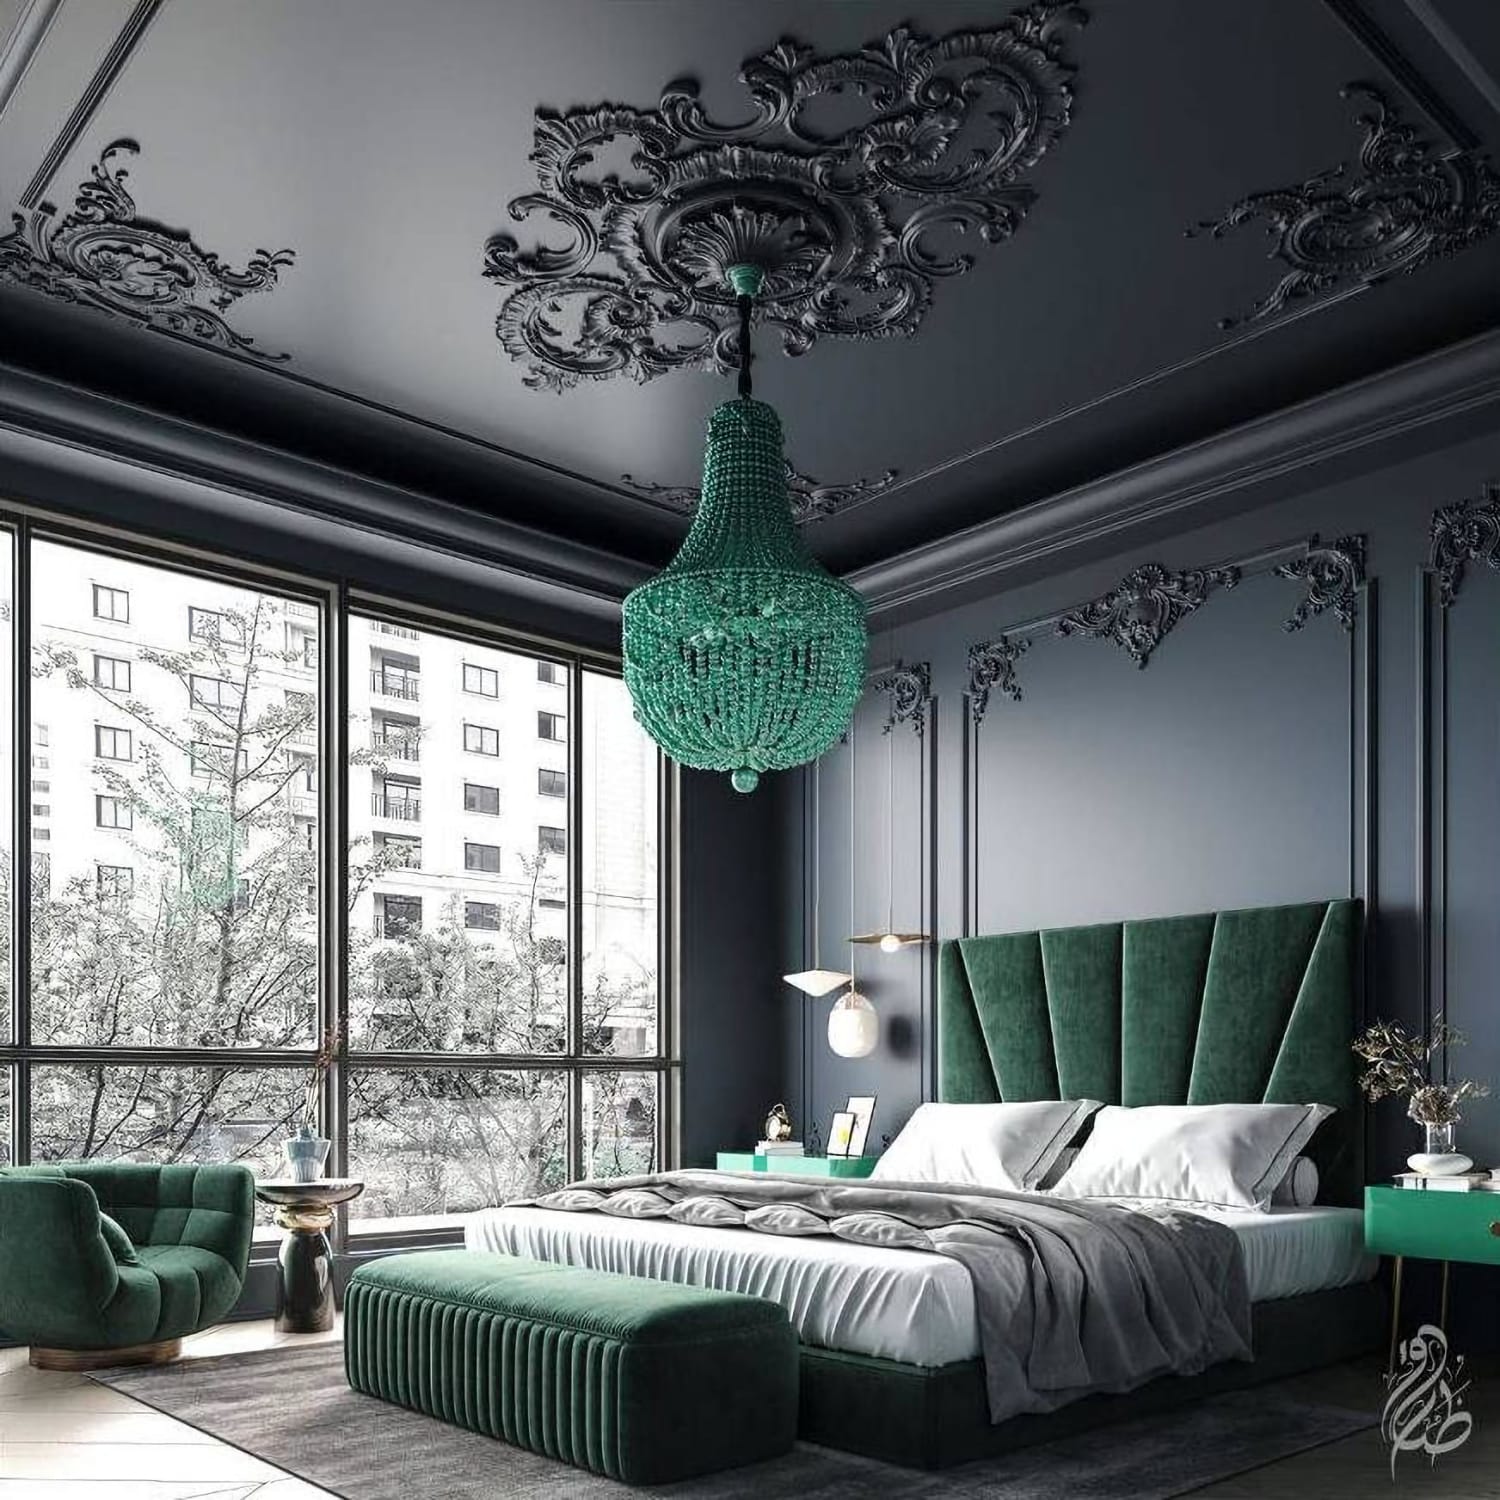 This astonishing bedroom design {by Tarek Alkhattab}